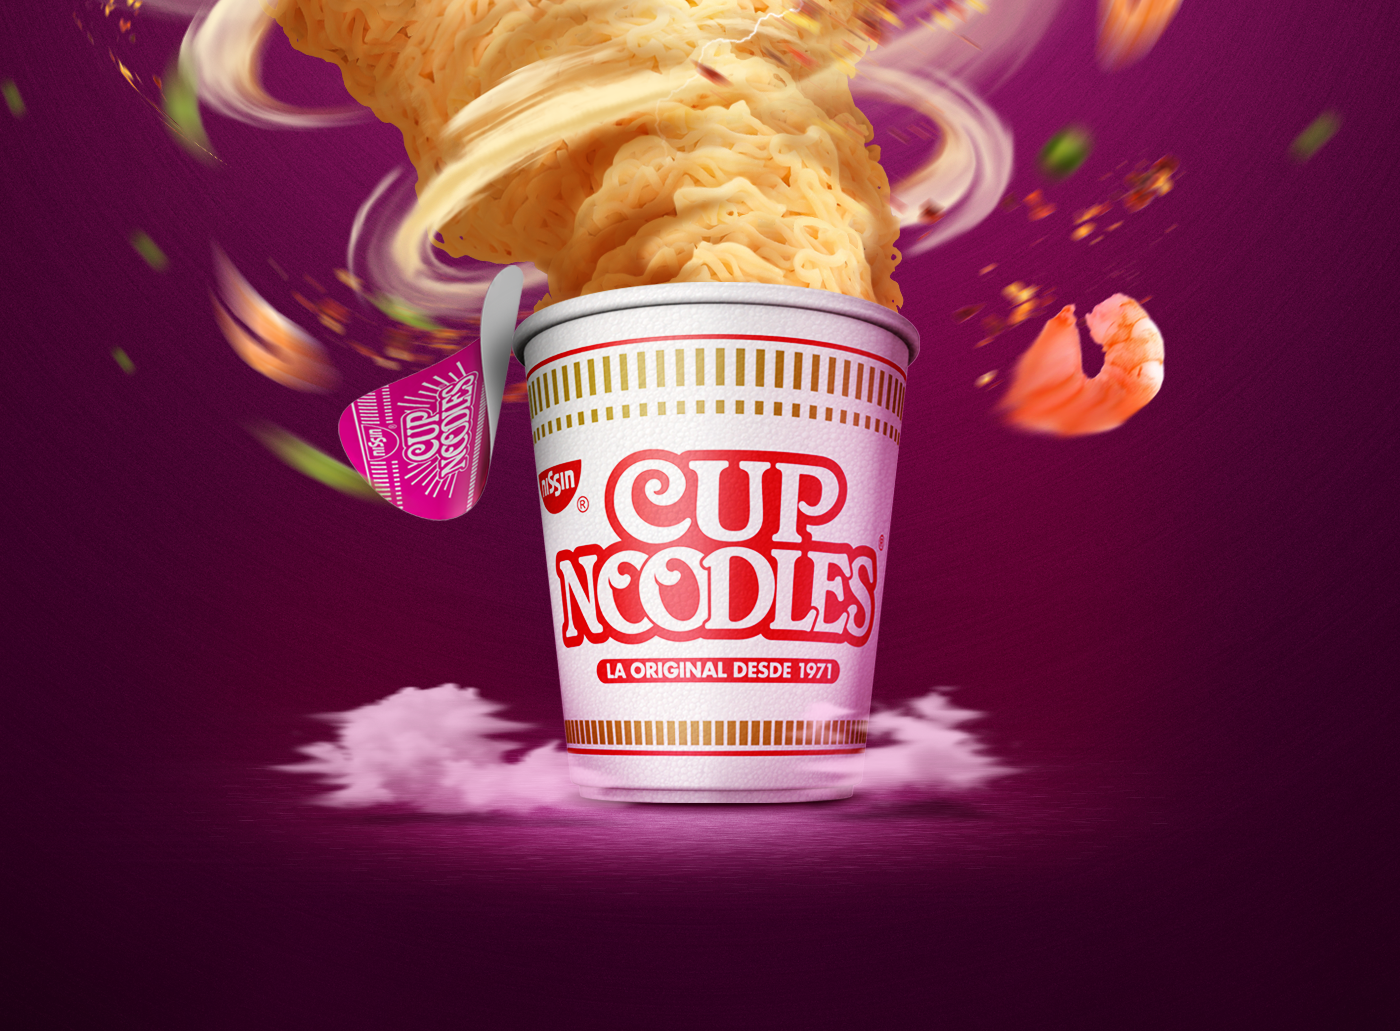 nissin CUP NOODLES fire Hot diablo intense explosive flavor Food  ramen